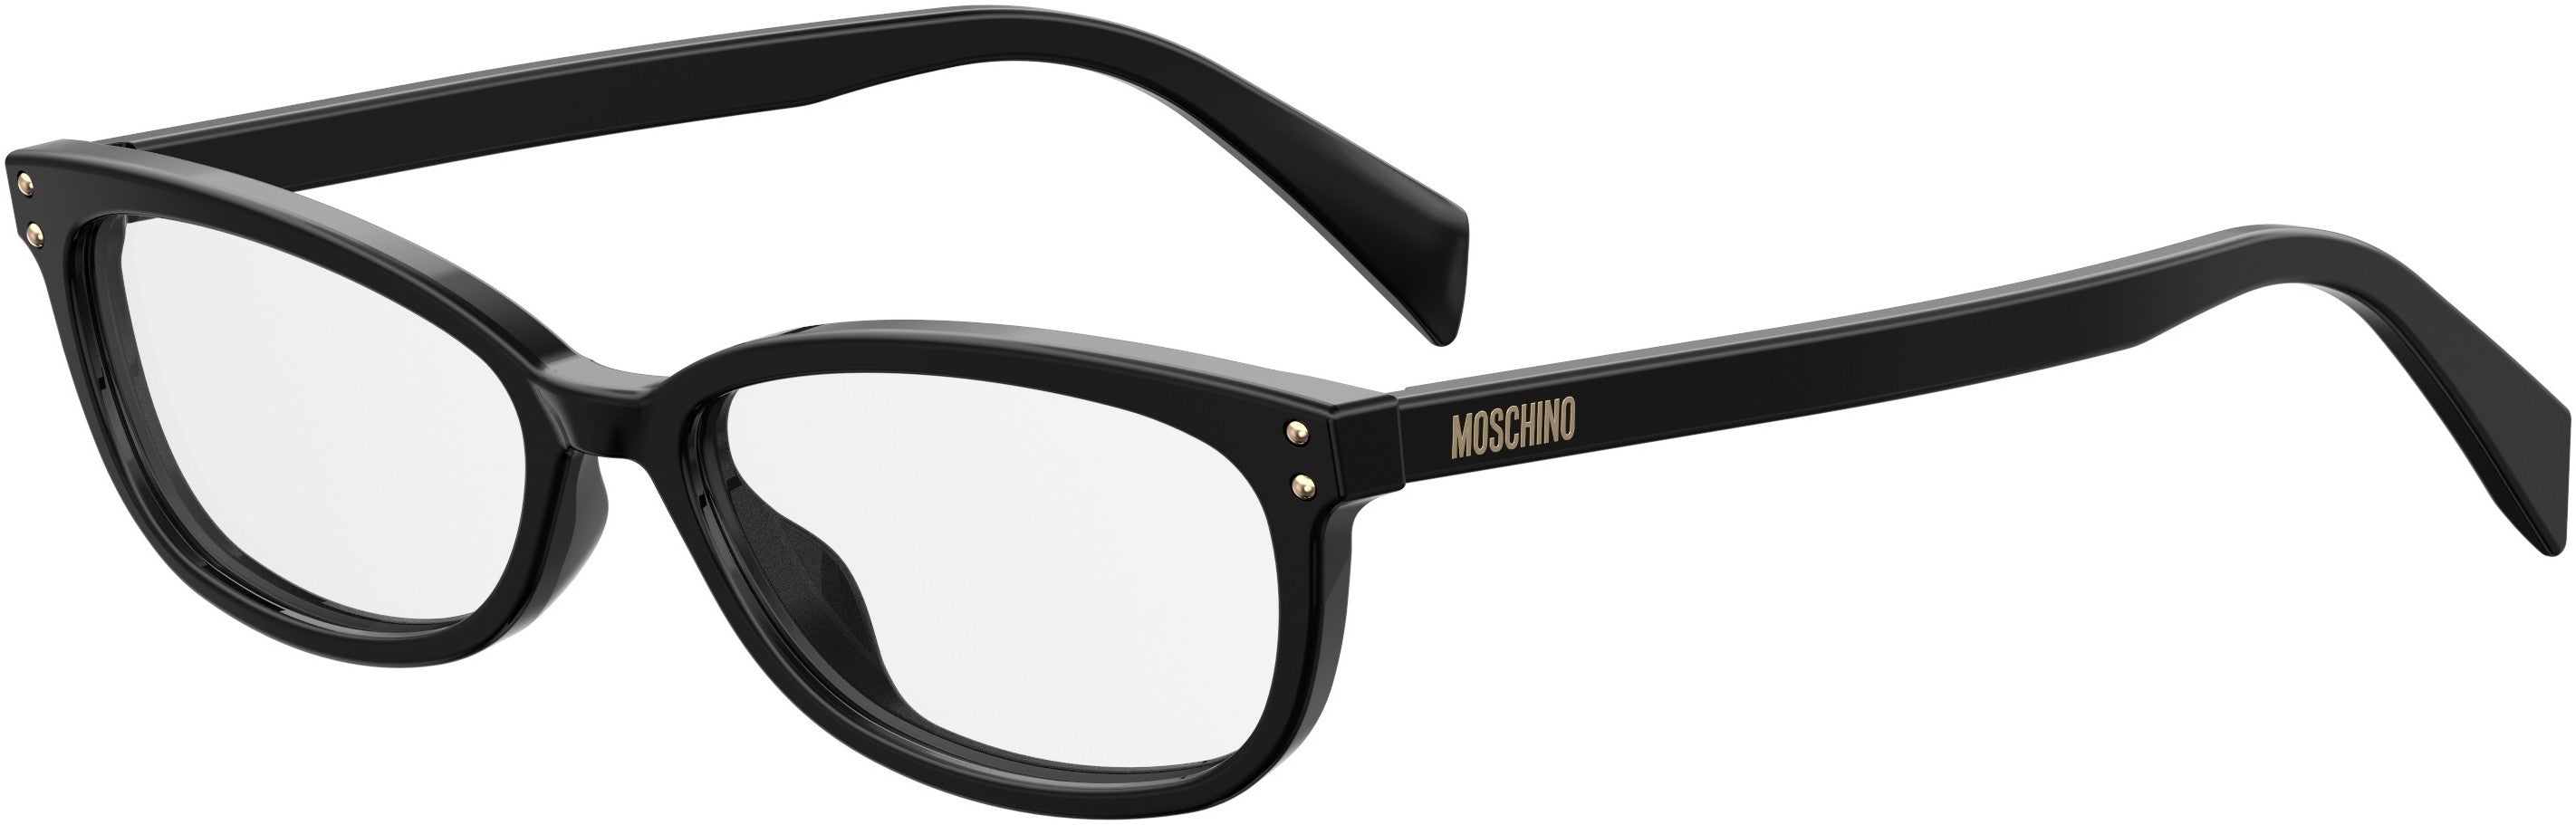  Moschino 536 Rectangular Eyeglasses 0807-0807  Black (00 Demo Lens)